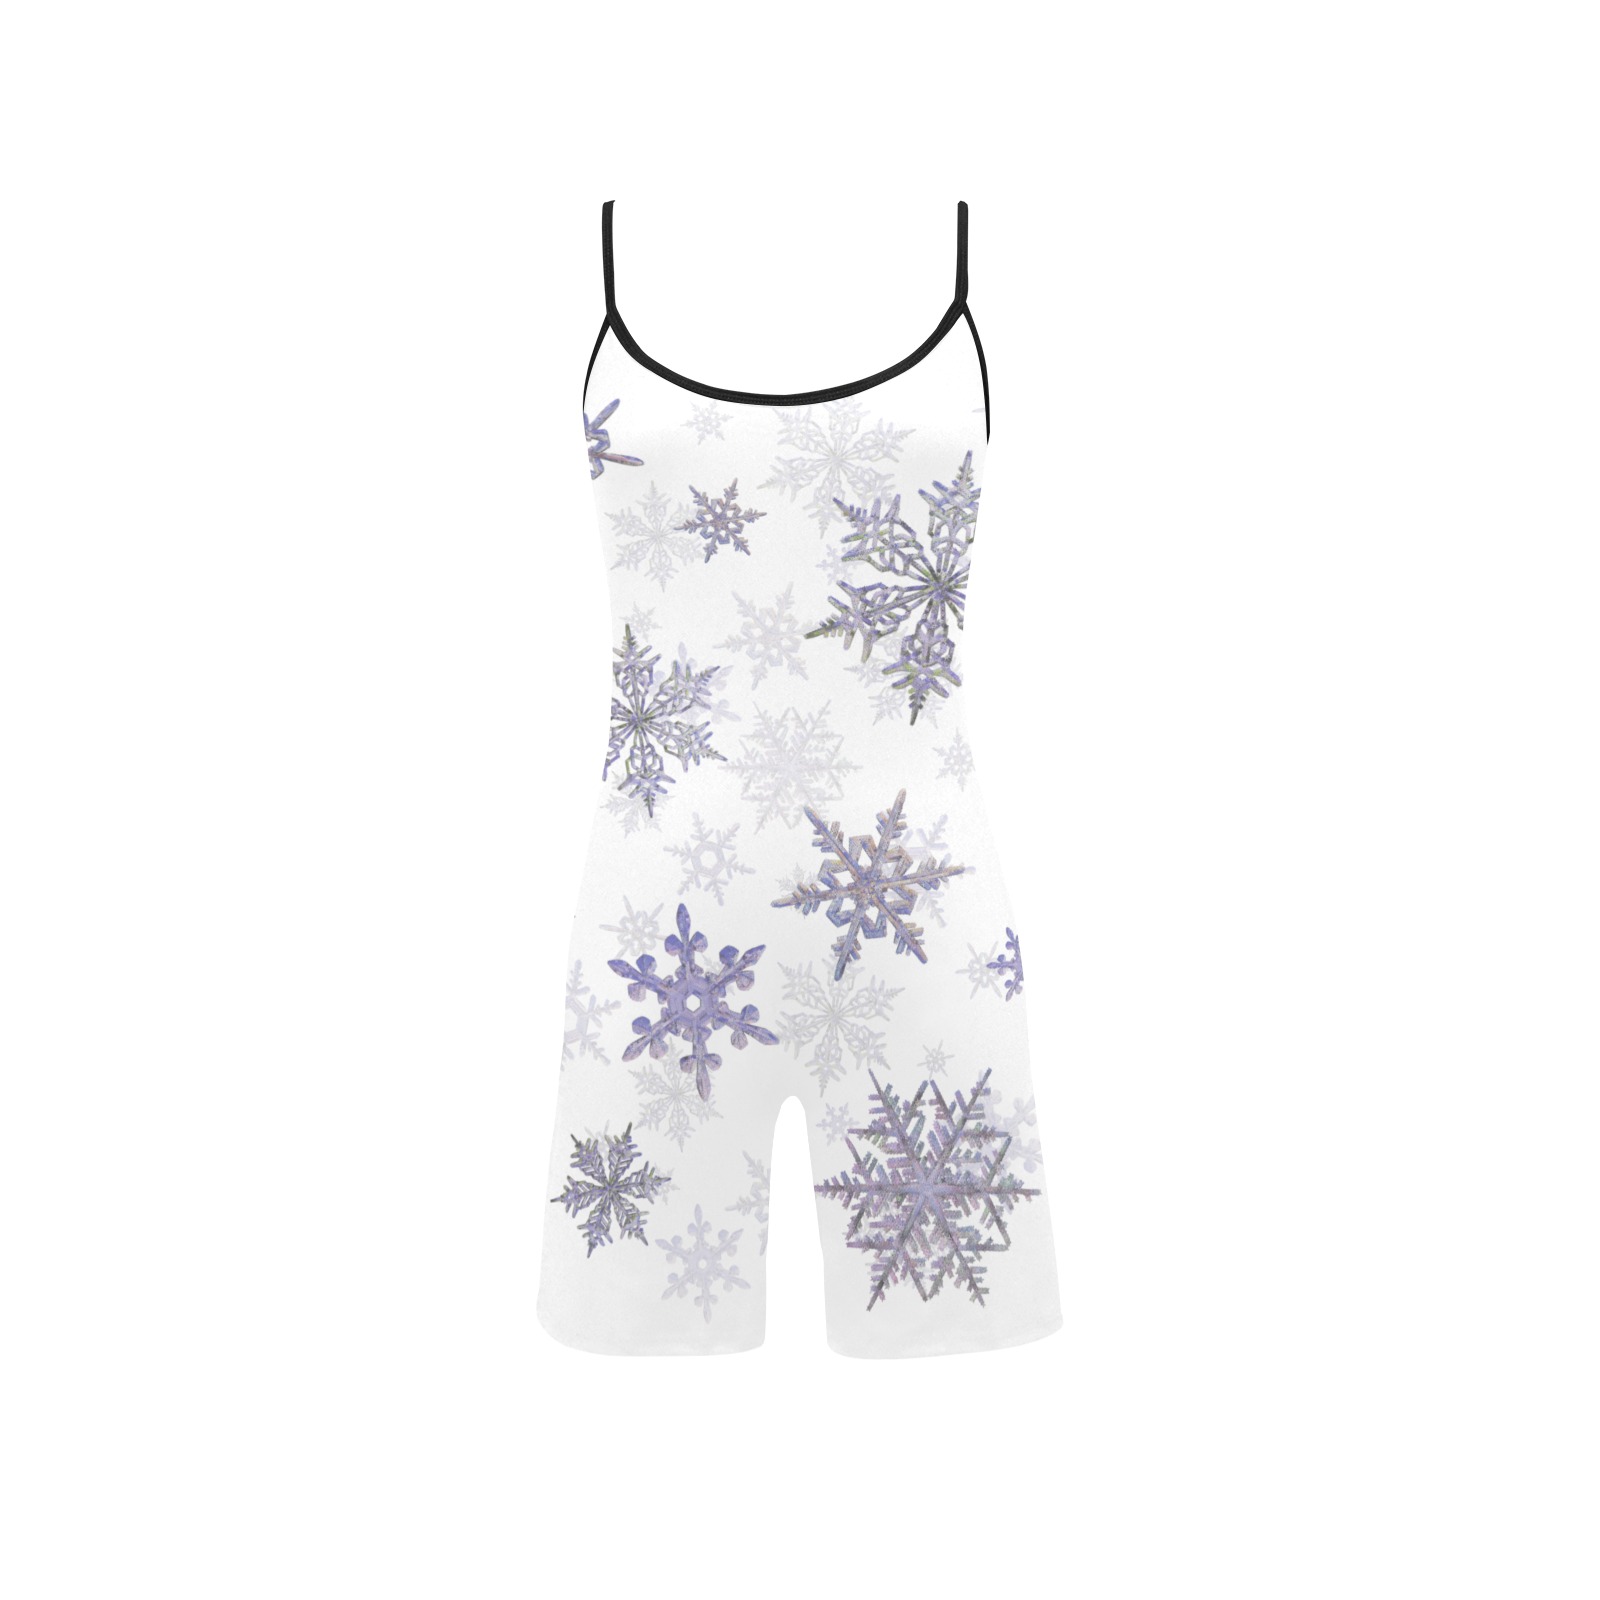 Snowflakes Winter Christmas time pattern Women's Short Yoga Bodysuit